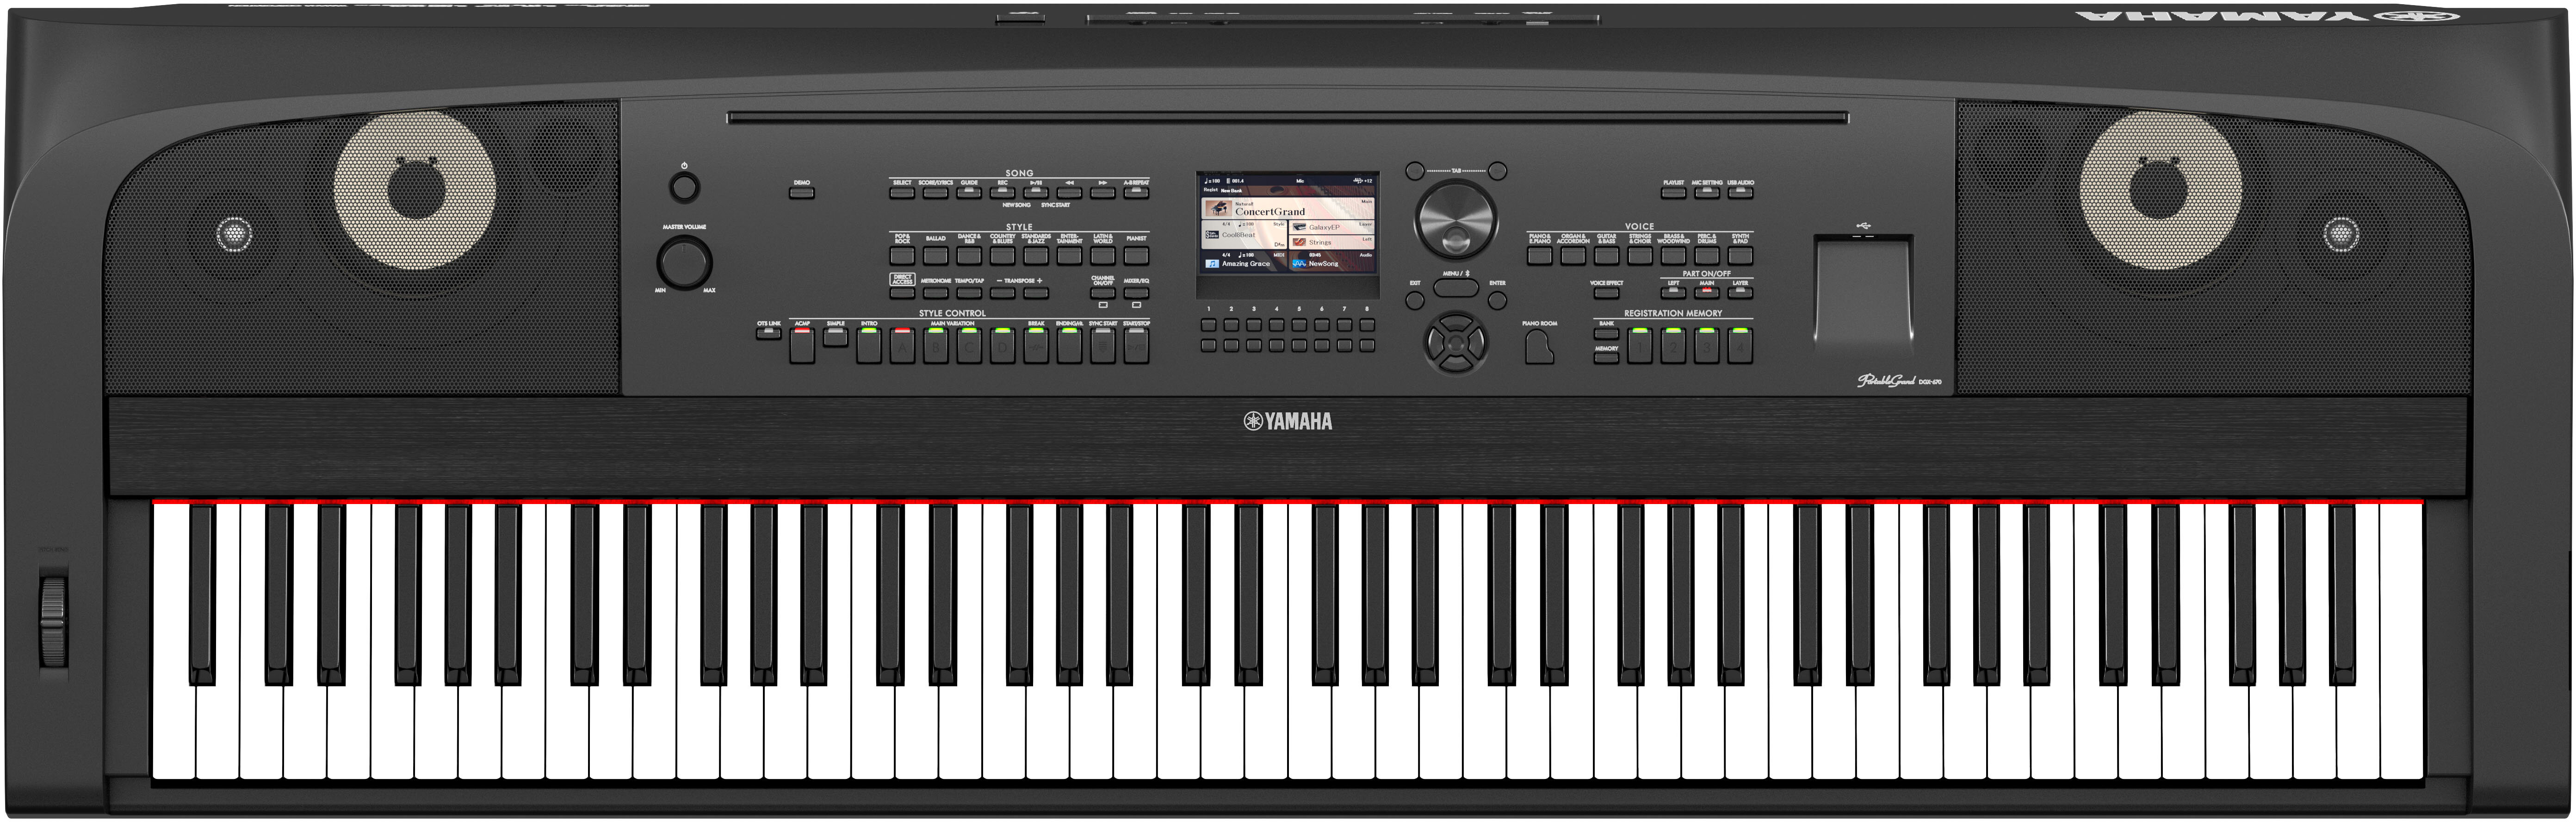 Portable Digital Piano in Black - Yamaha DGX670B